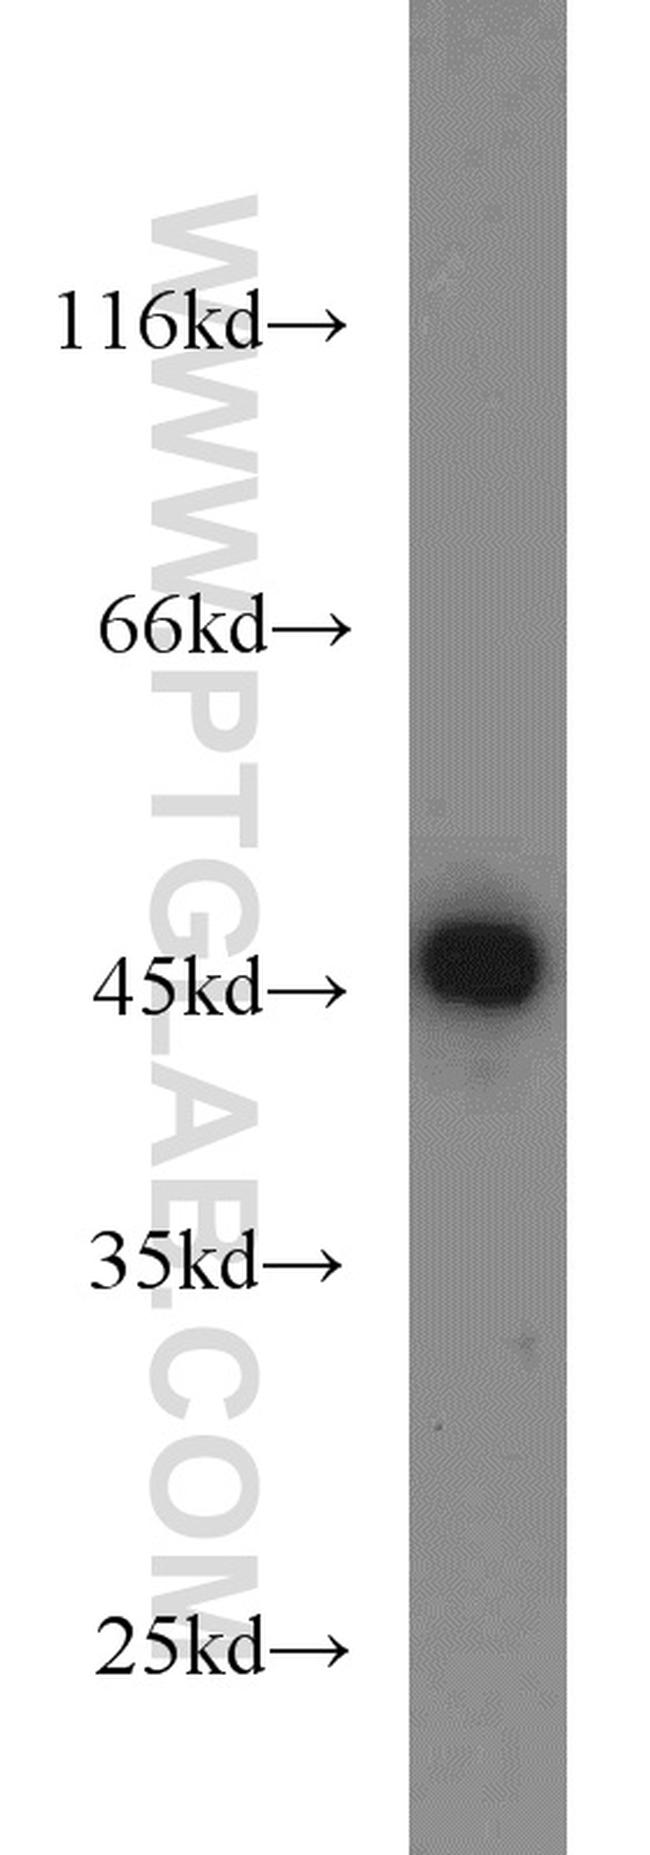 CDC37 Antibody in Western Blot (WB)